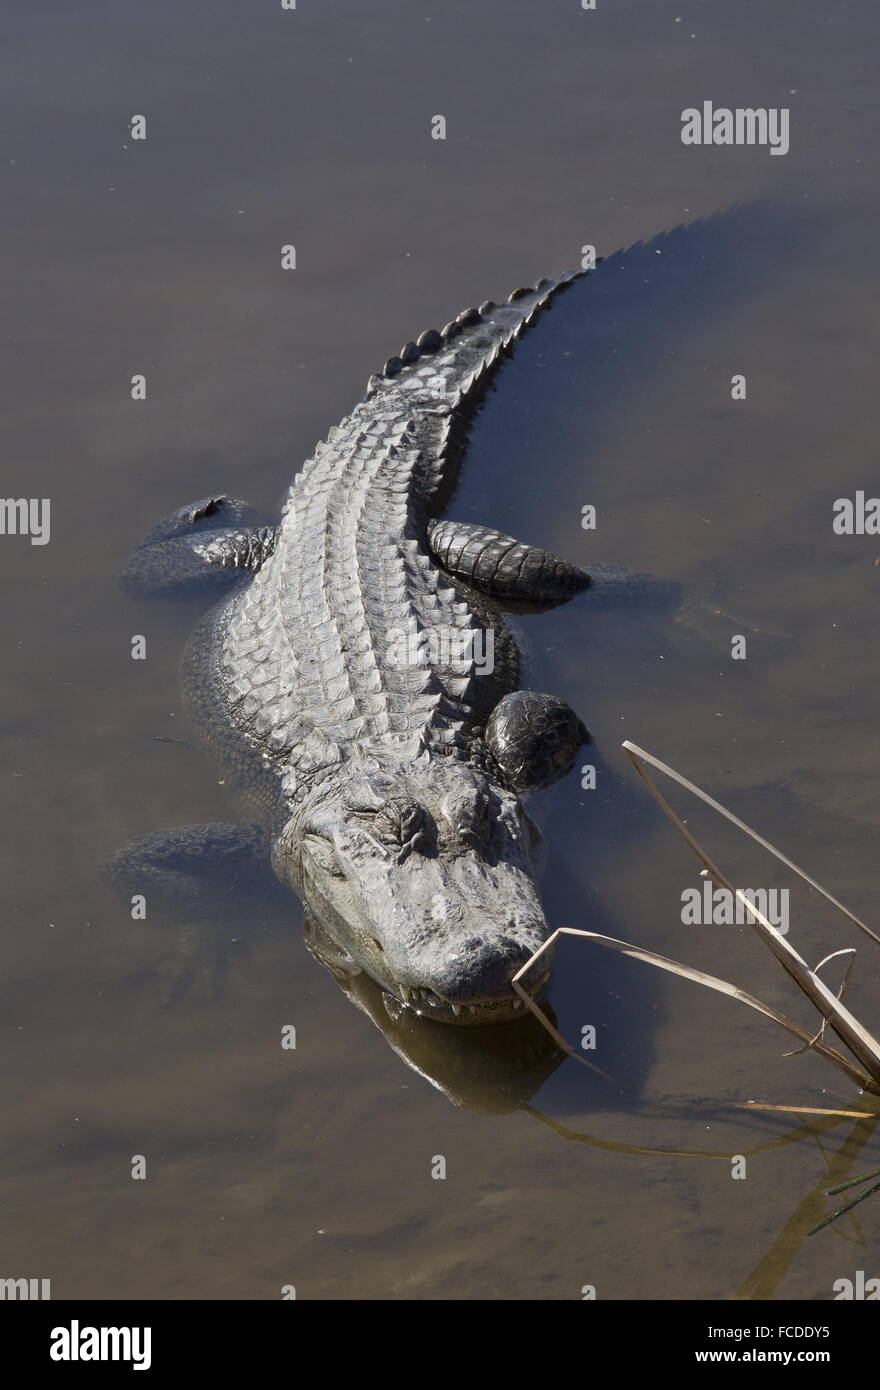 American Alligator, Alligator mississippiensis in winter, Texas coast. Stock Photo